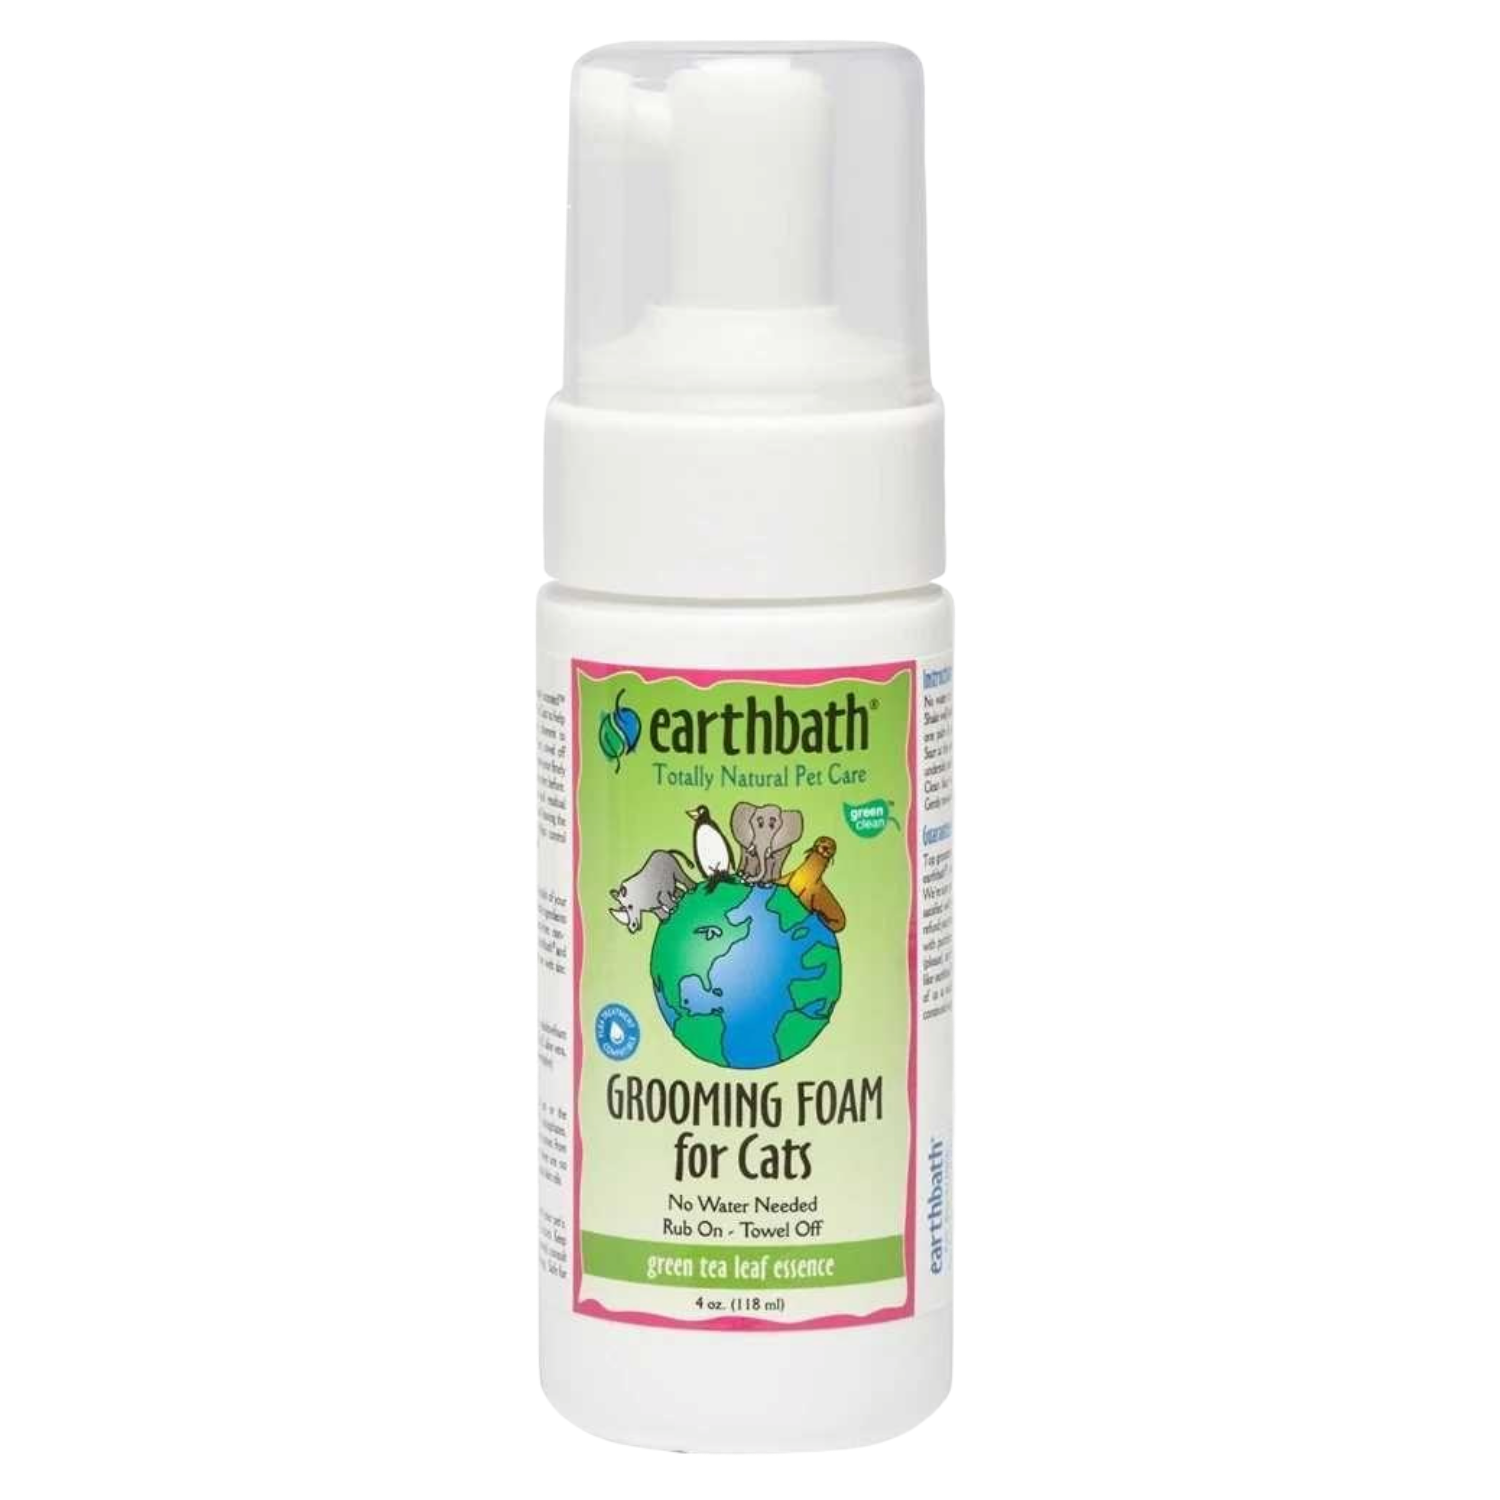 Earthbath Grooming Foam for Cats (Green Tea and Awapuhi) - 118ml